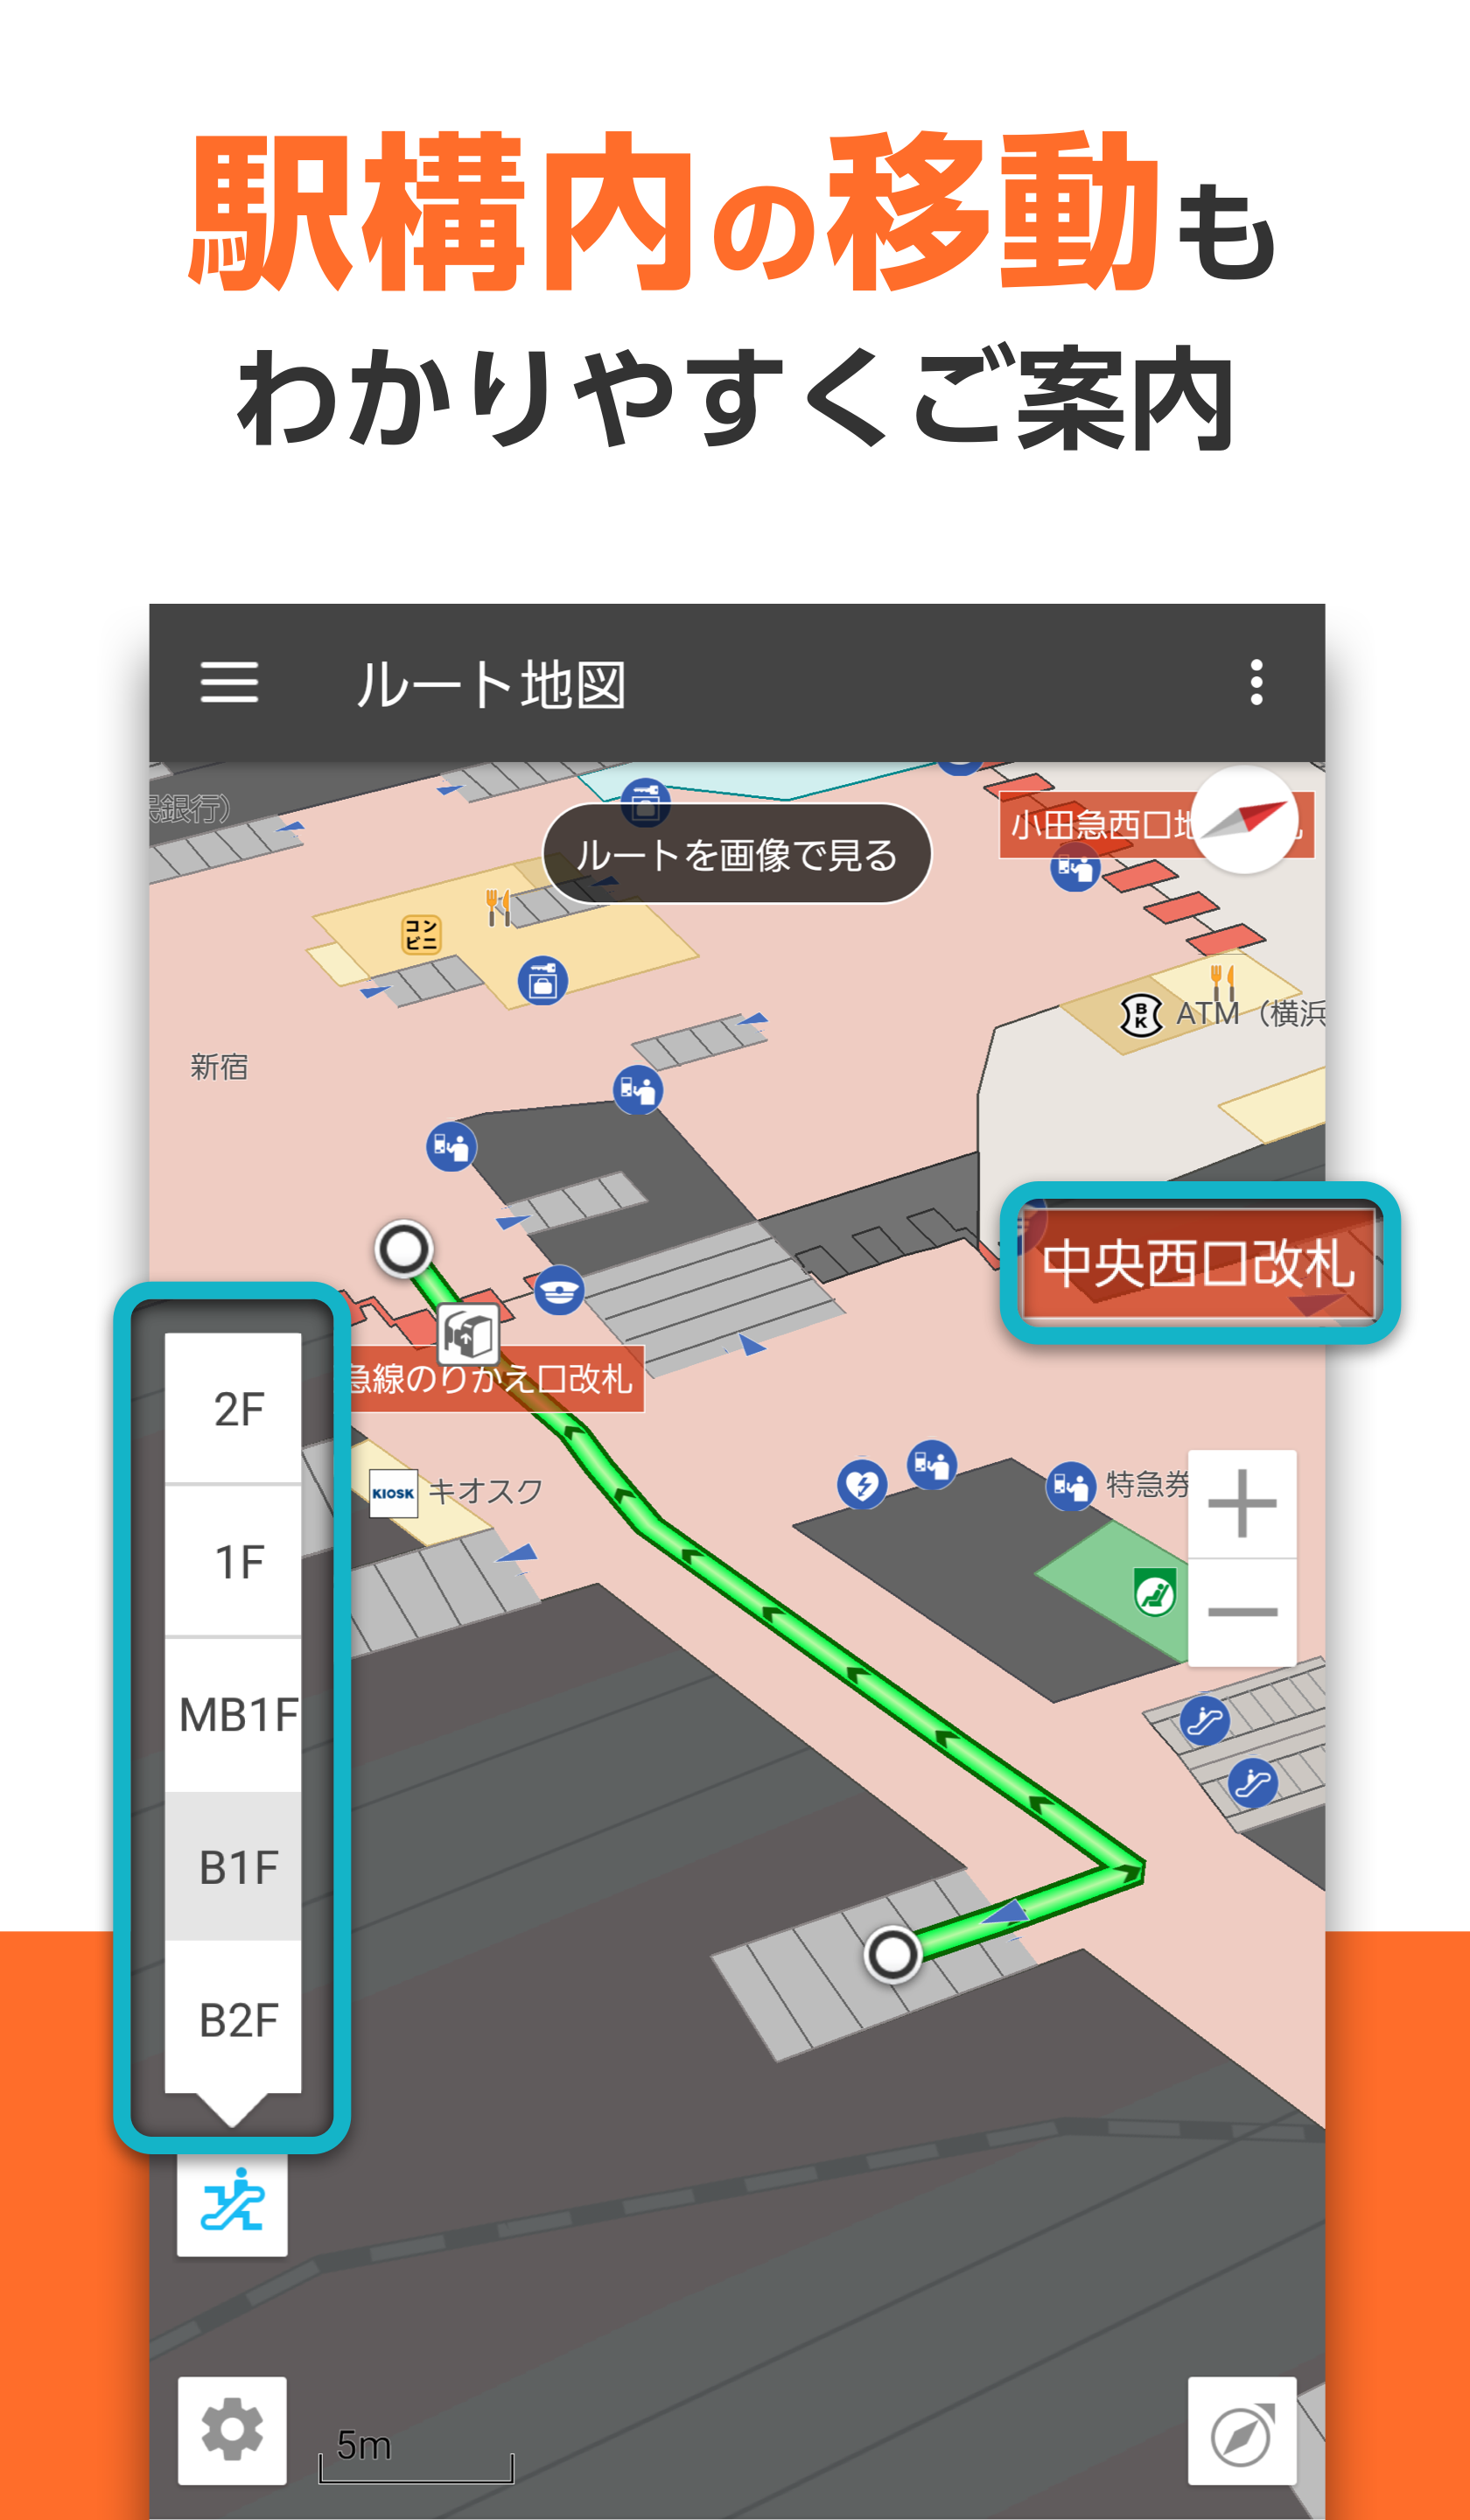 Android application auナビウォーク  -  乗換案内と地図の総合移動アプリ screenshort